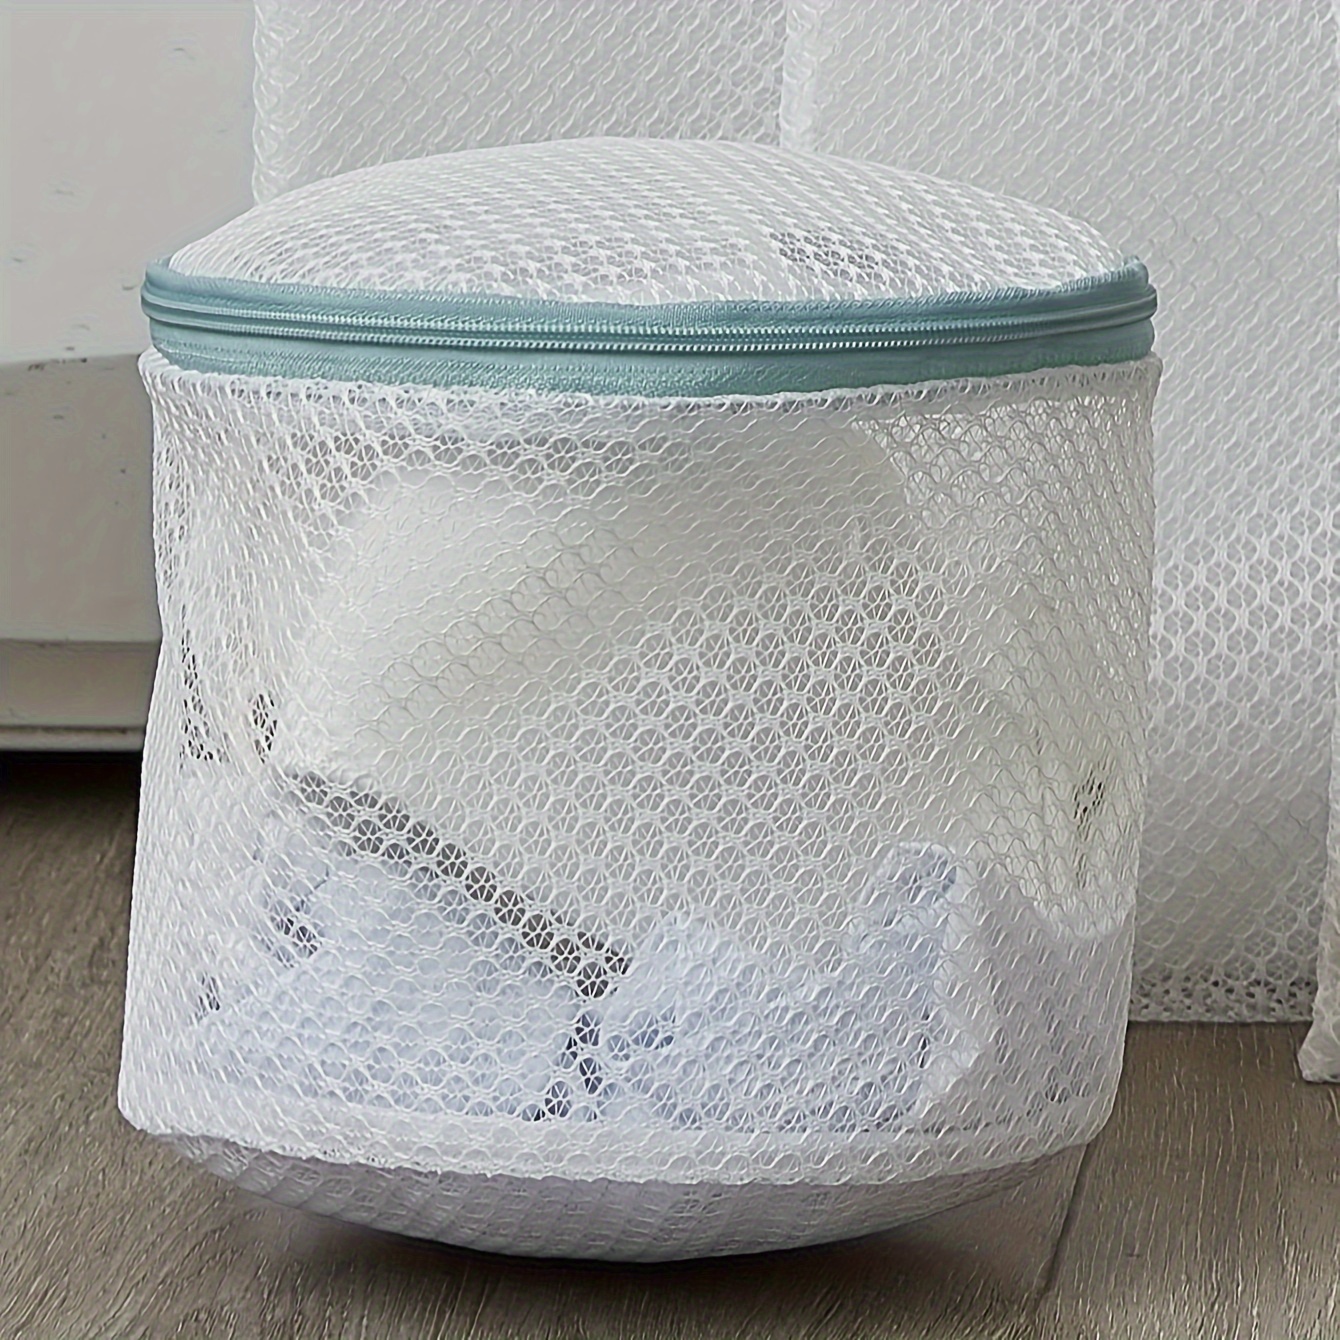 Bra Protection Washing Bag Non fluorescent Underwear Laundry - Temu